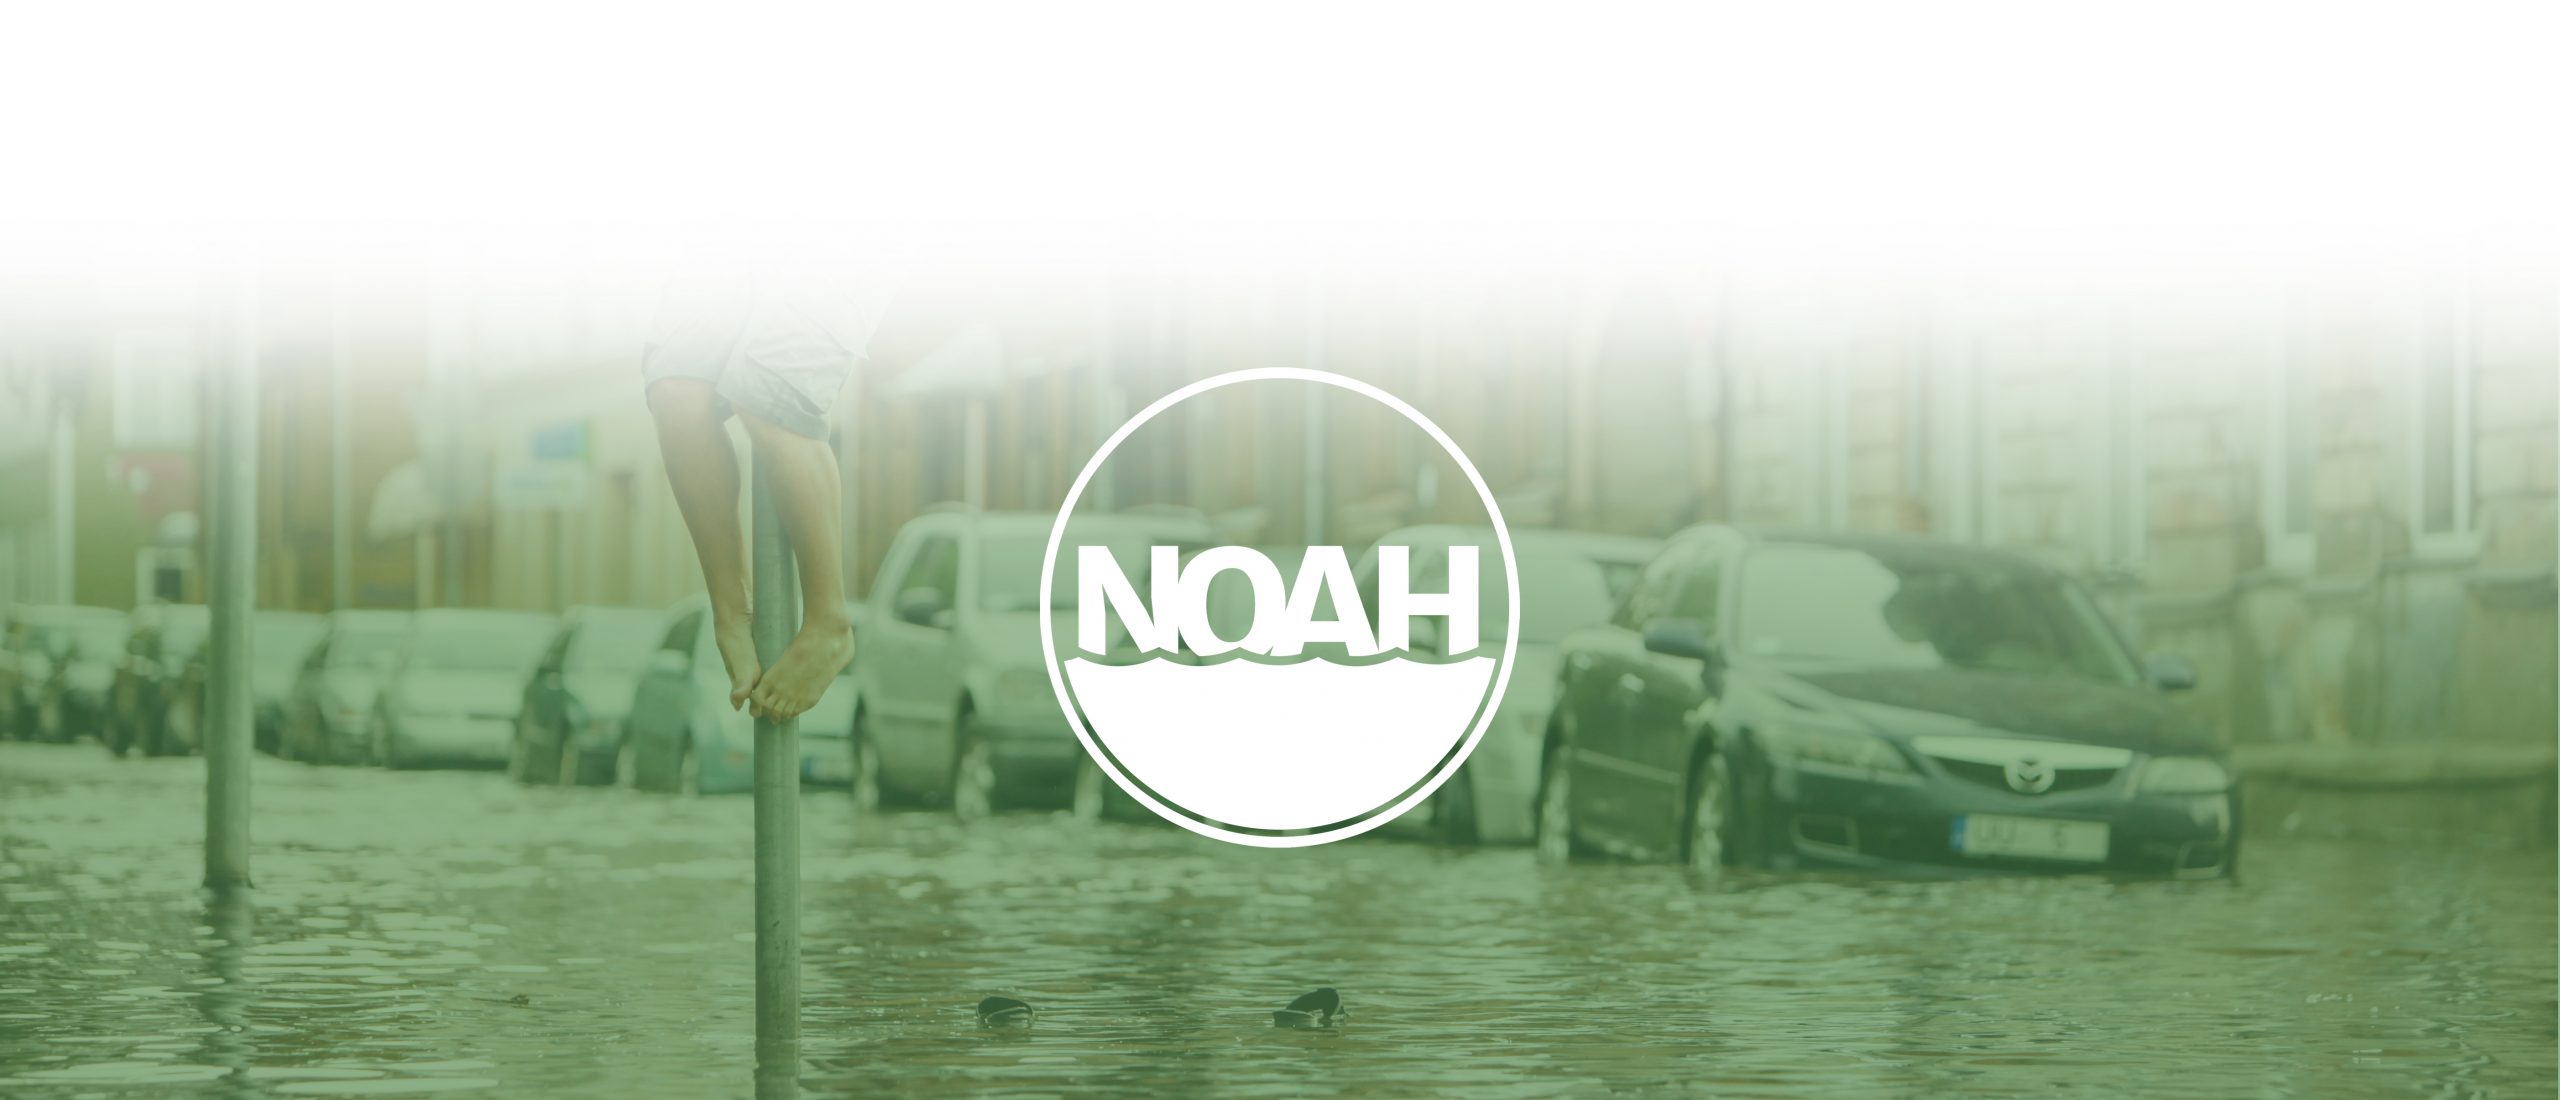 NOAH cover photo and logo.